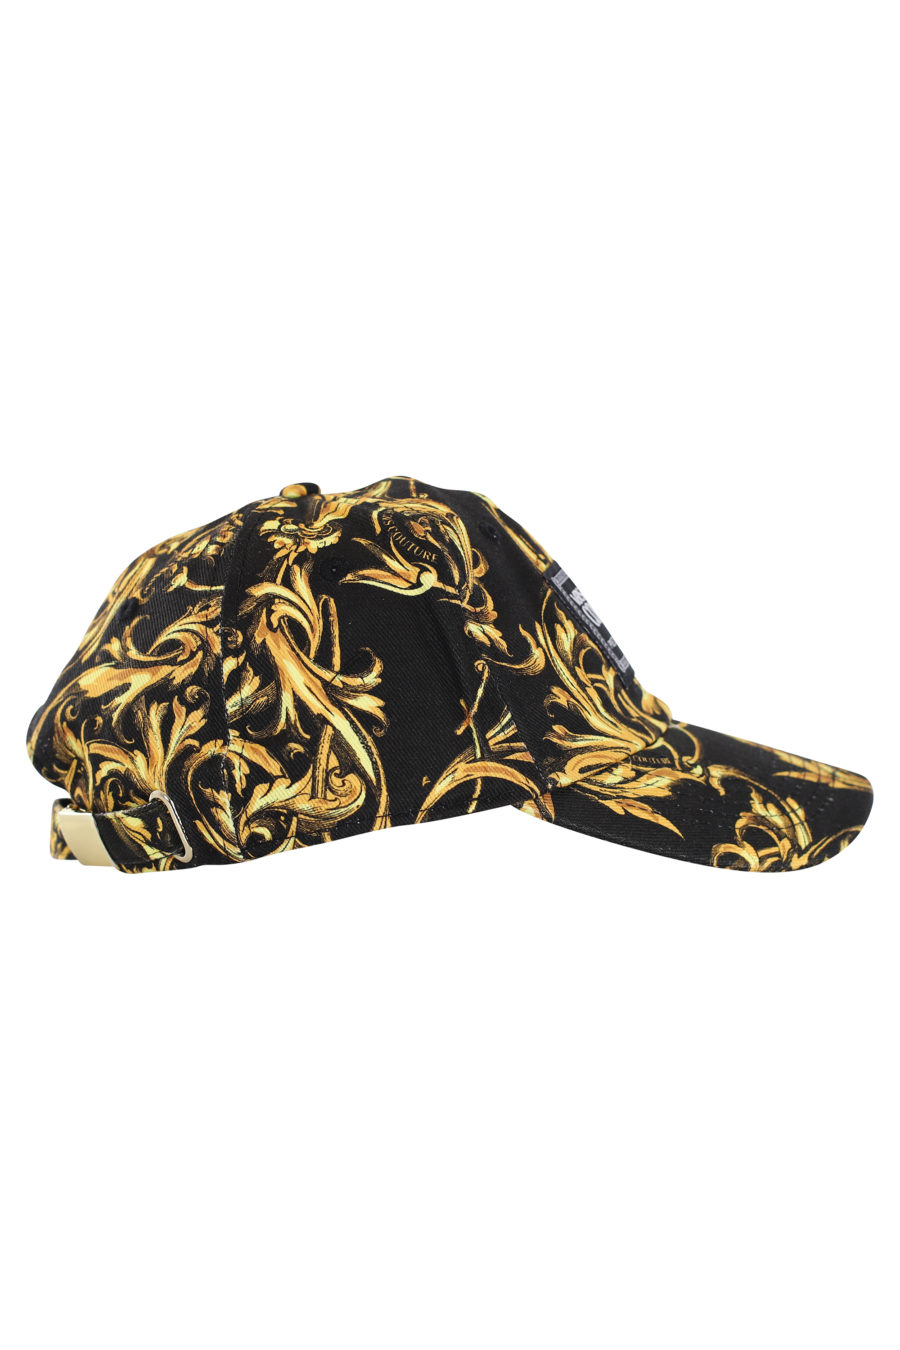 Gorra negra con estampado barroco dorado - IMG 0147